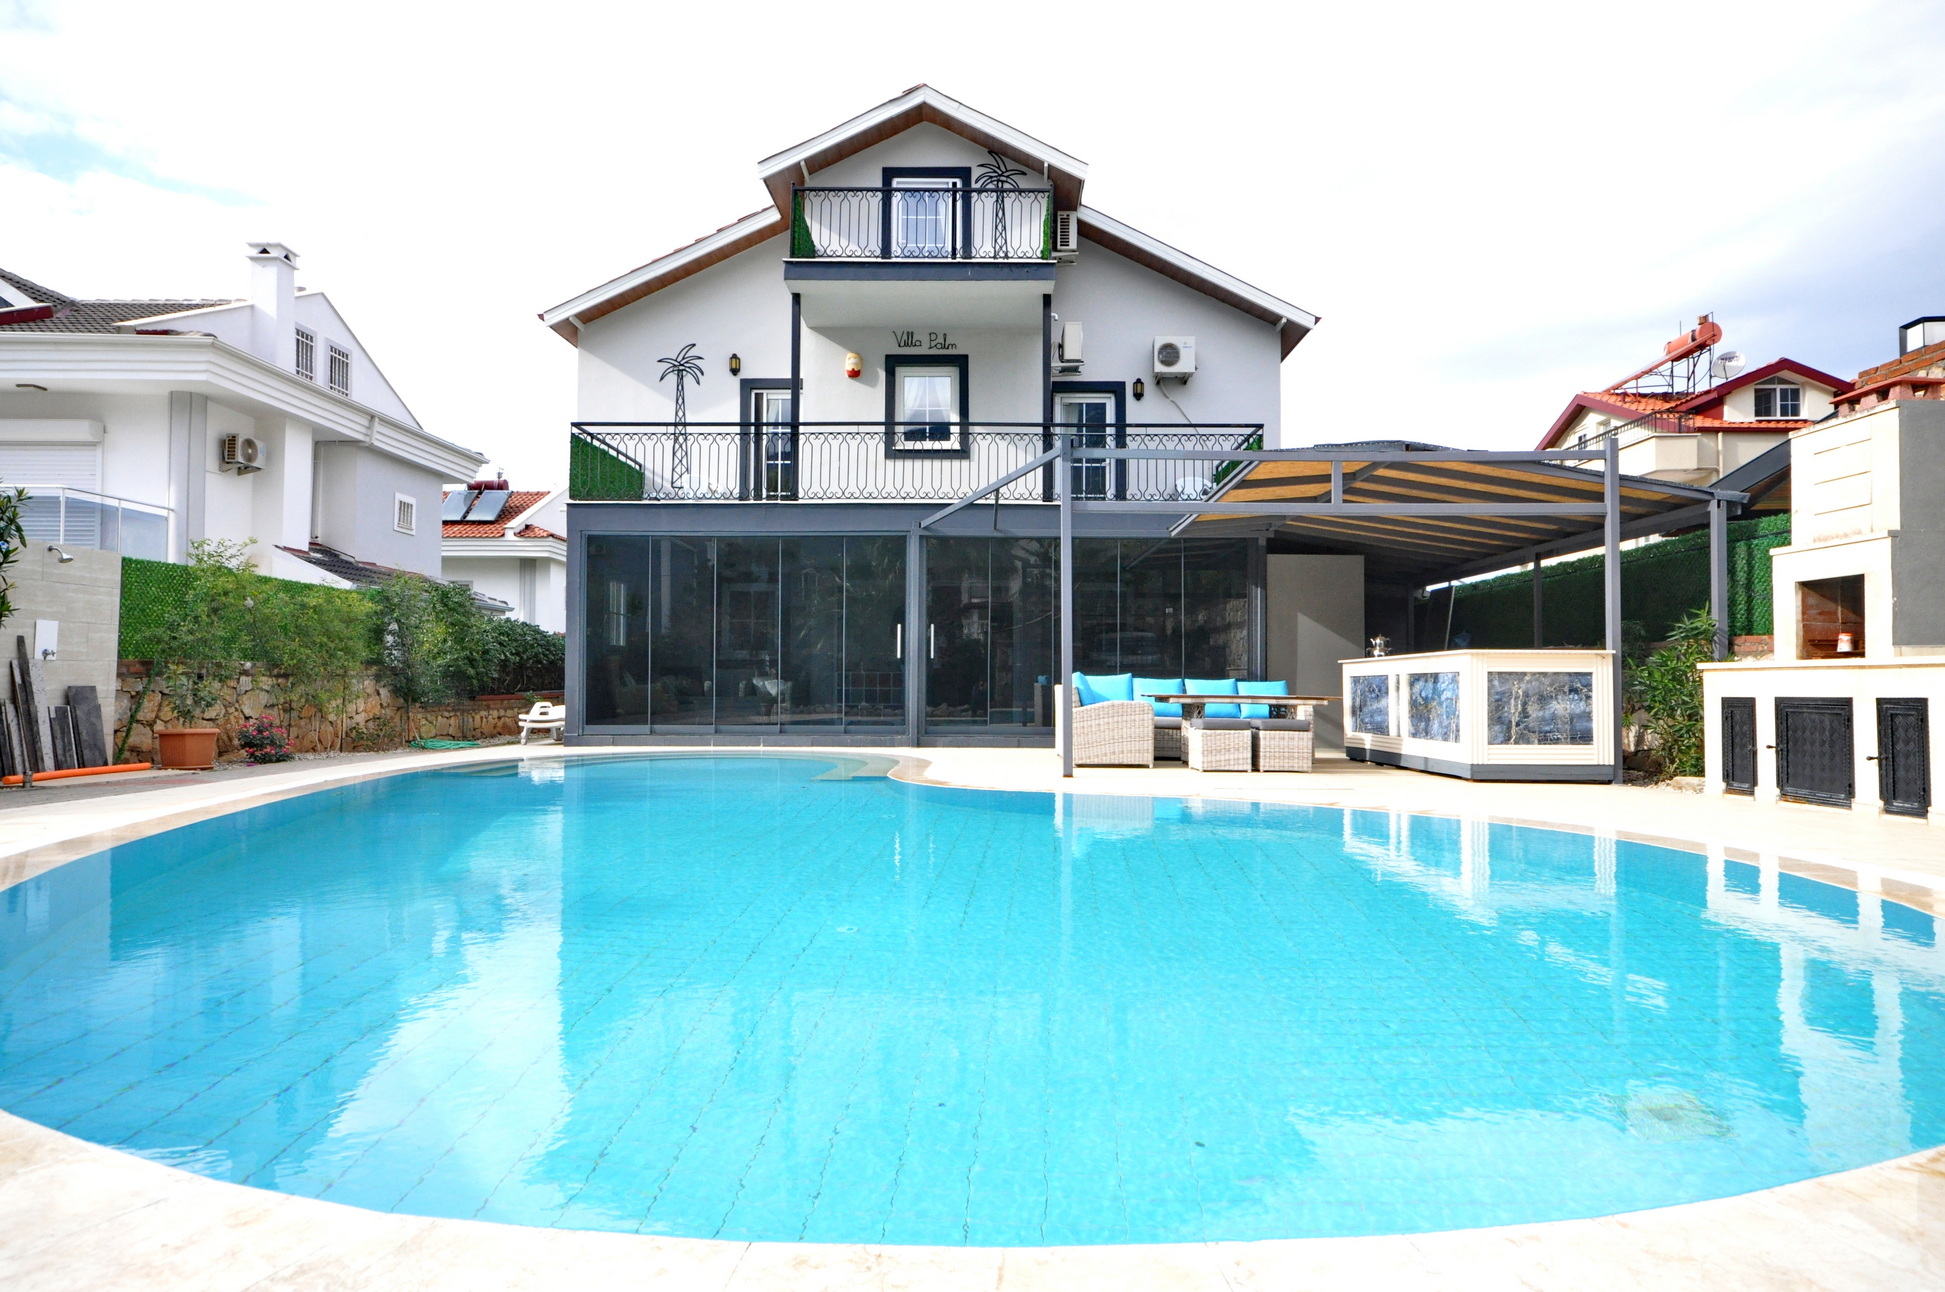 4 Bedroom Detached Triplex Villa with Swimming Pool